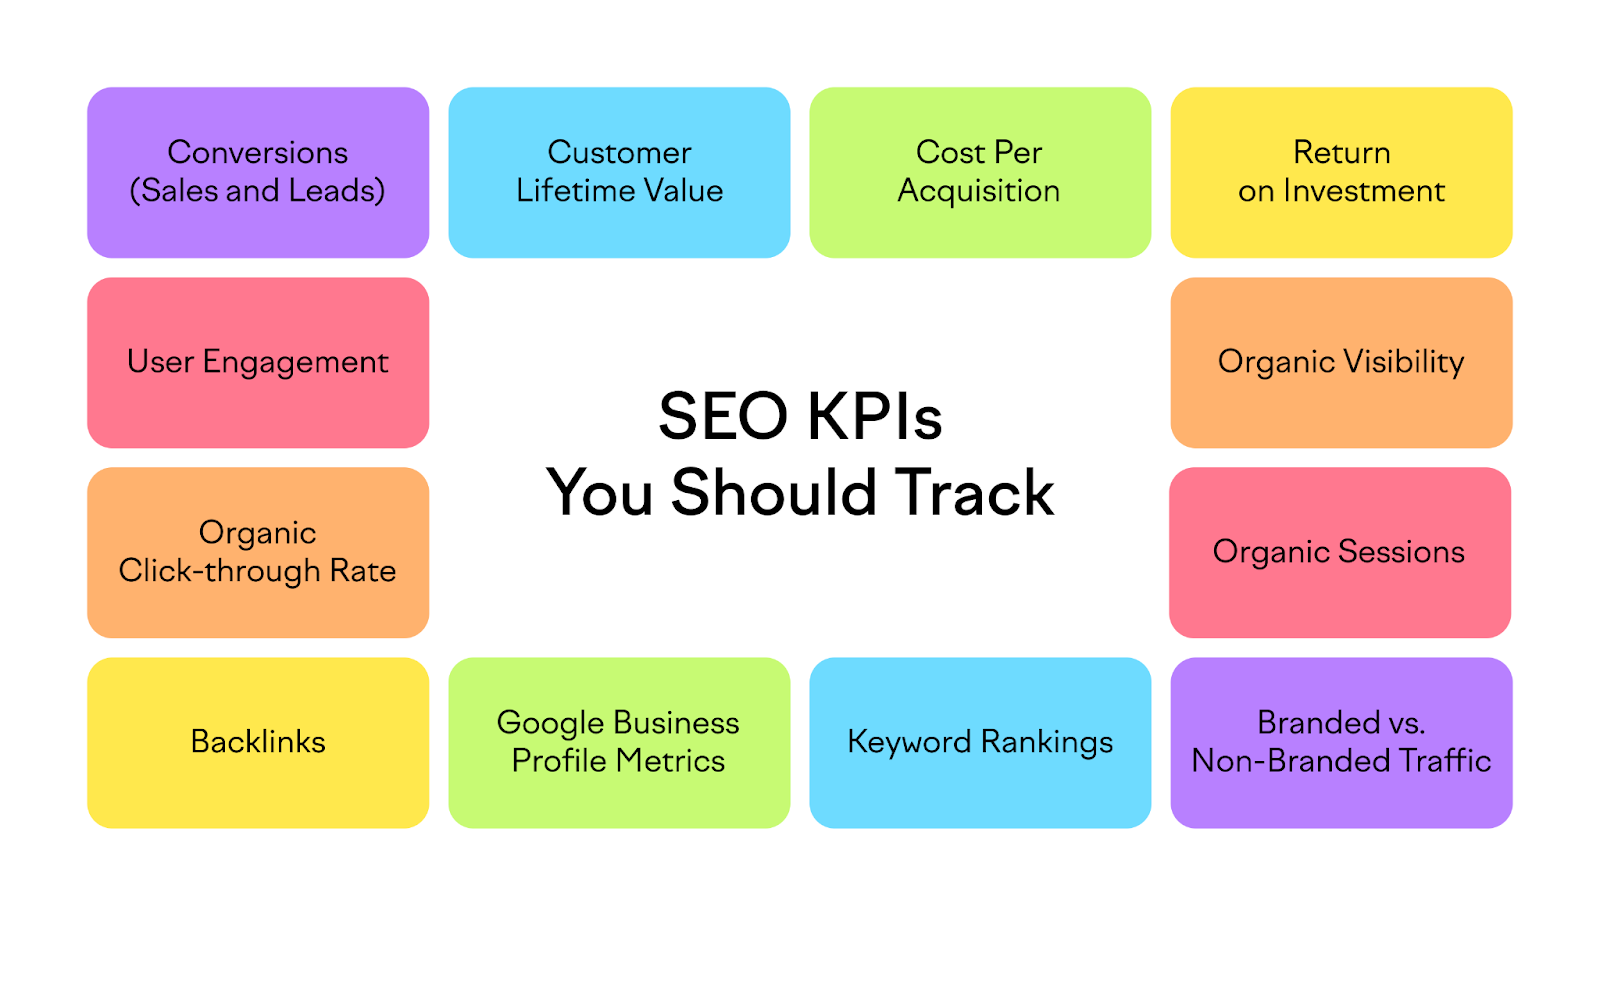 SEO KPIs you should track explained